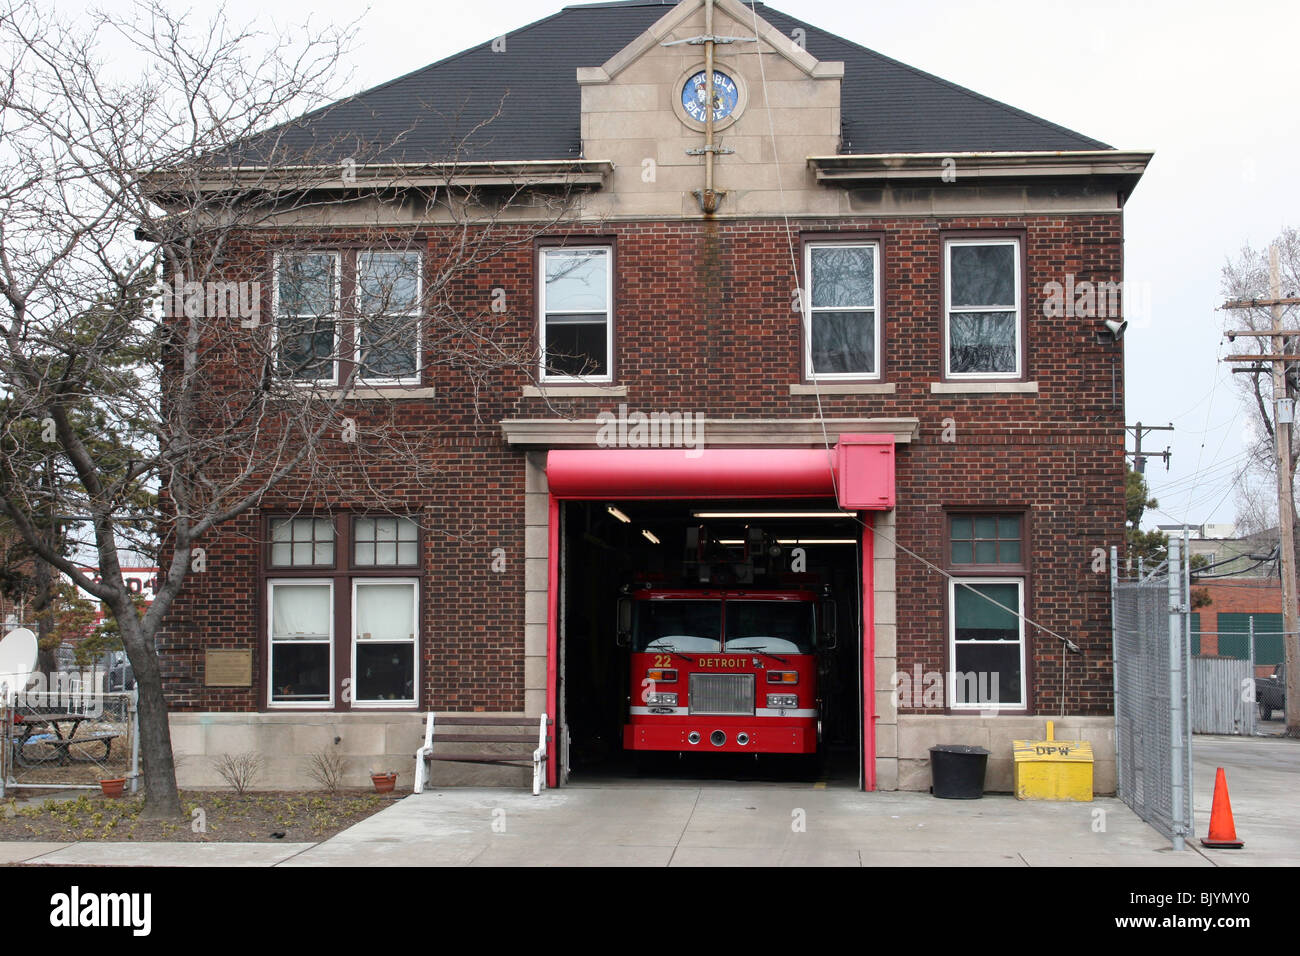 Firehouse Ladder 22 Detroit Fire Department Michigan USA, by David Traiforis/Dembinsky Photo Assoc Stock Photo